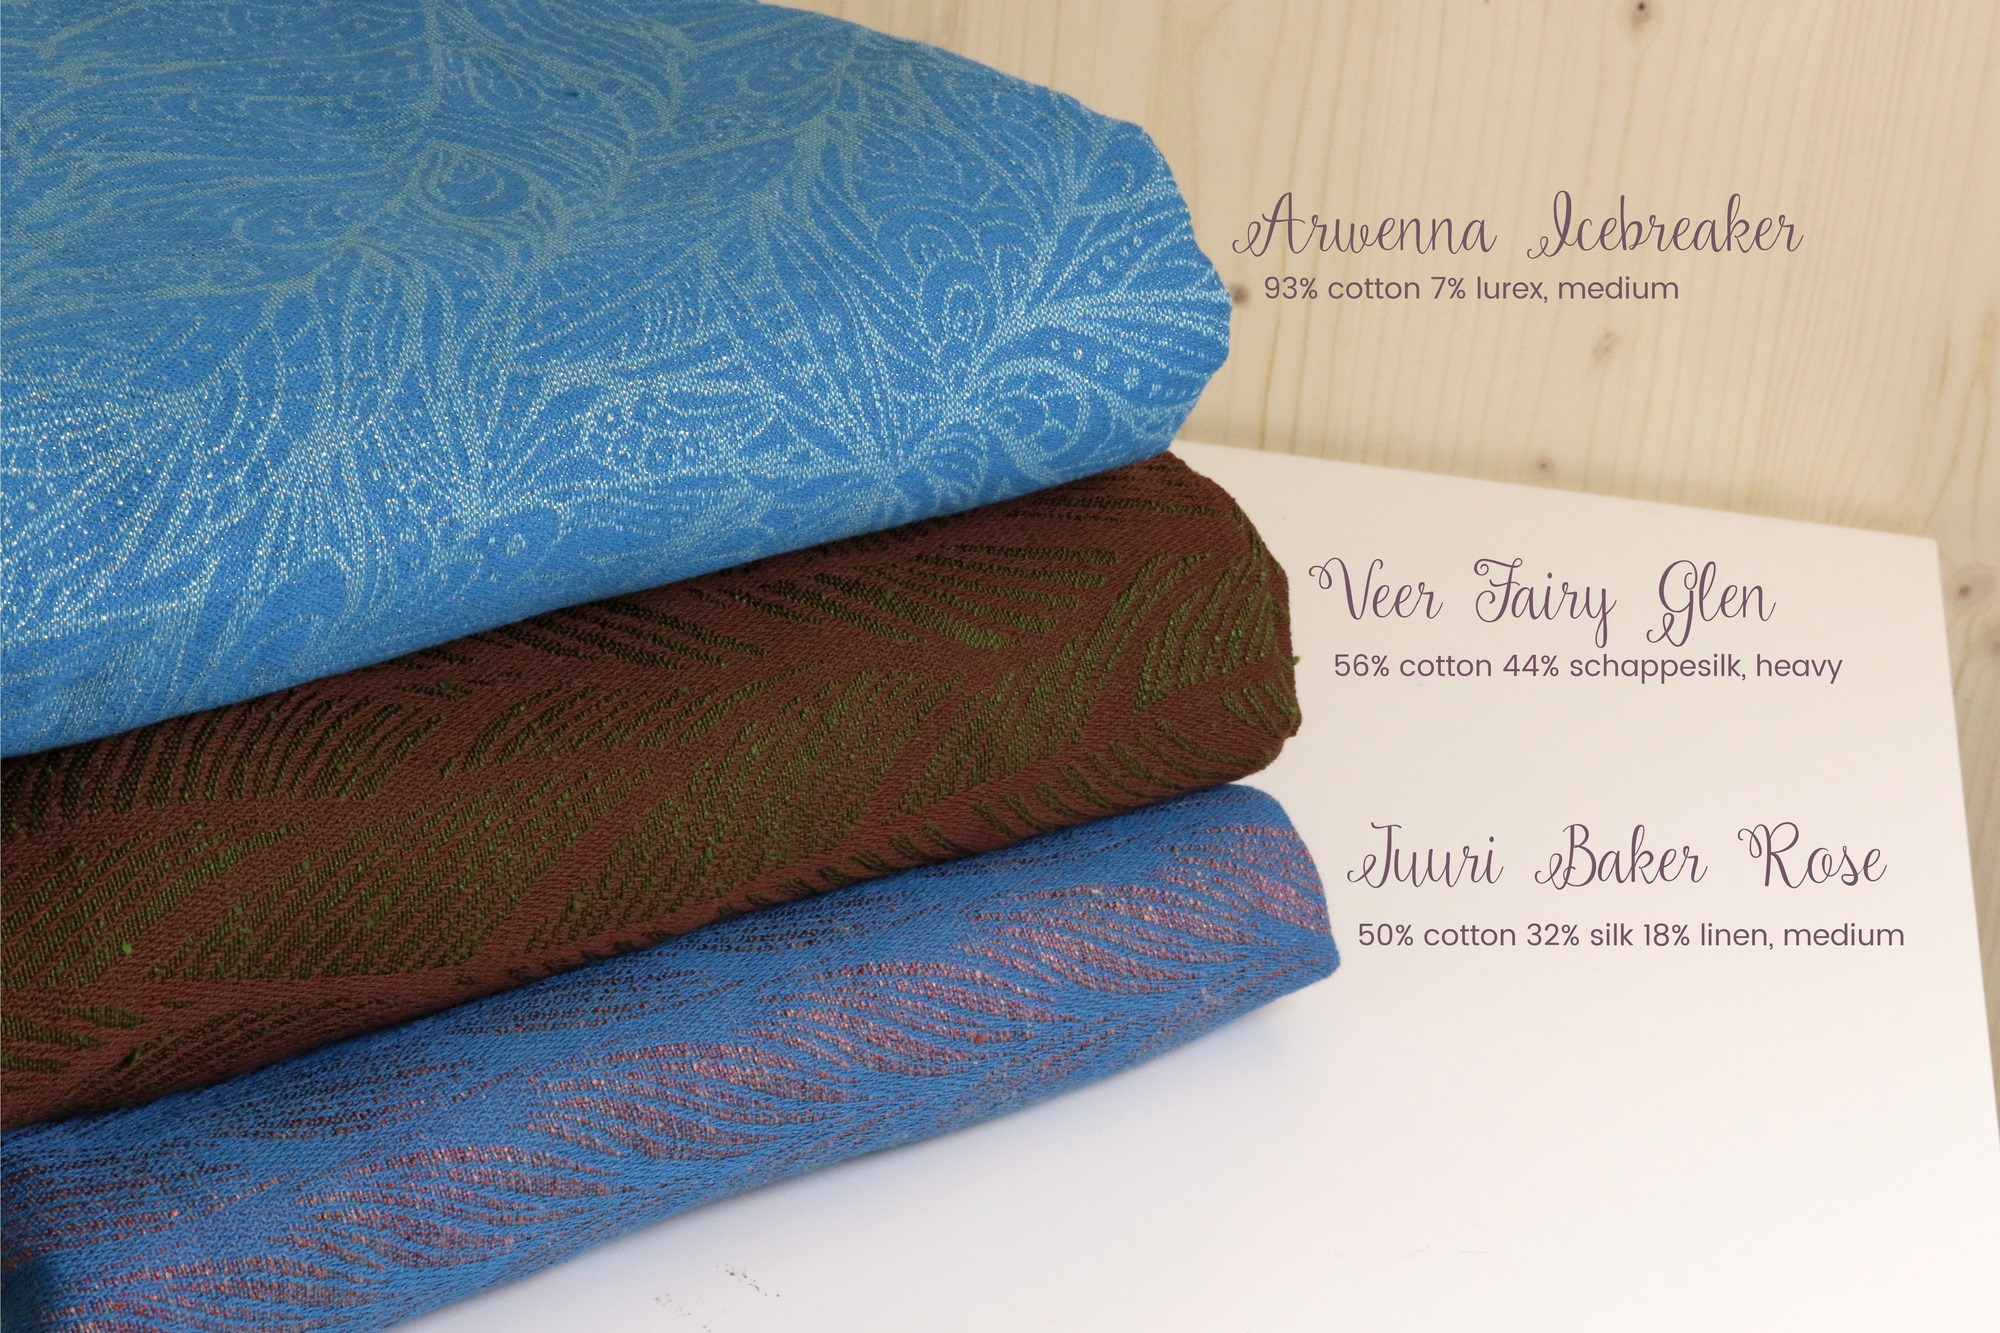 Neisna Juuri Baken Rose Wrap (silk, linen) Image